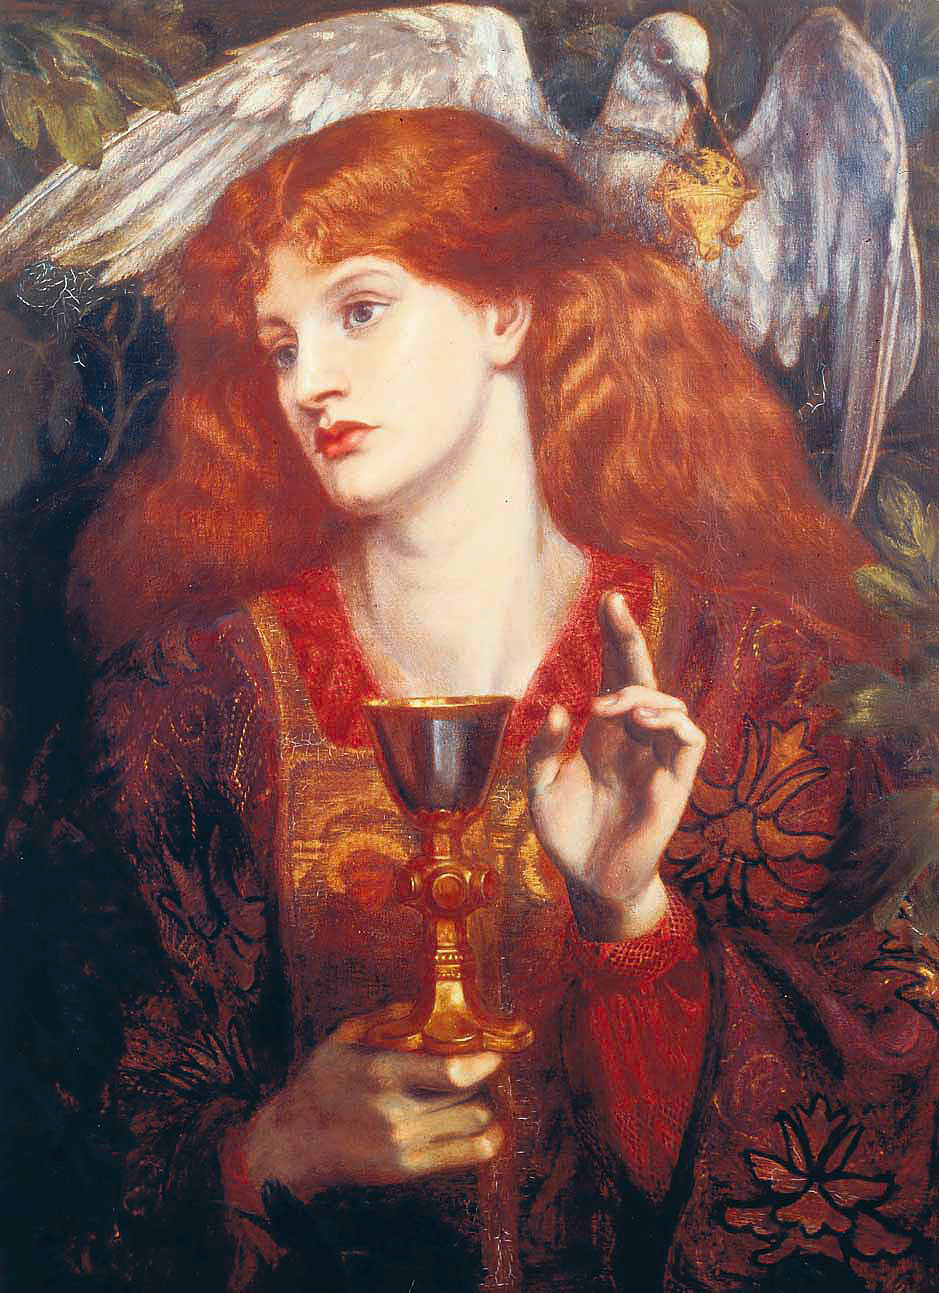 Dante Gabriel Rossetti's The Holy Grail (1860s)